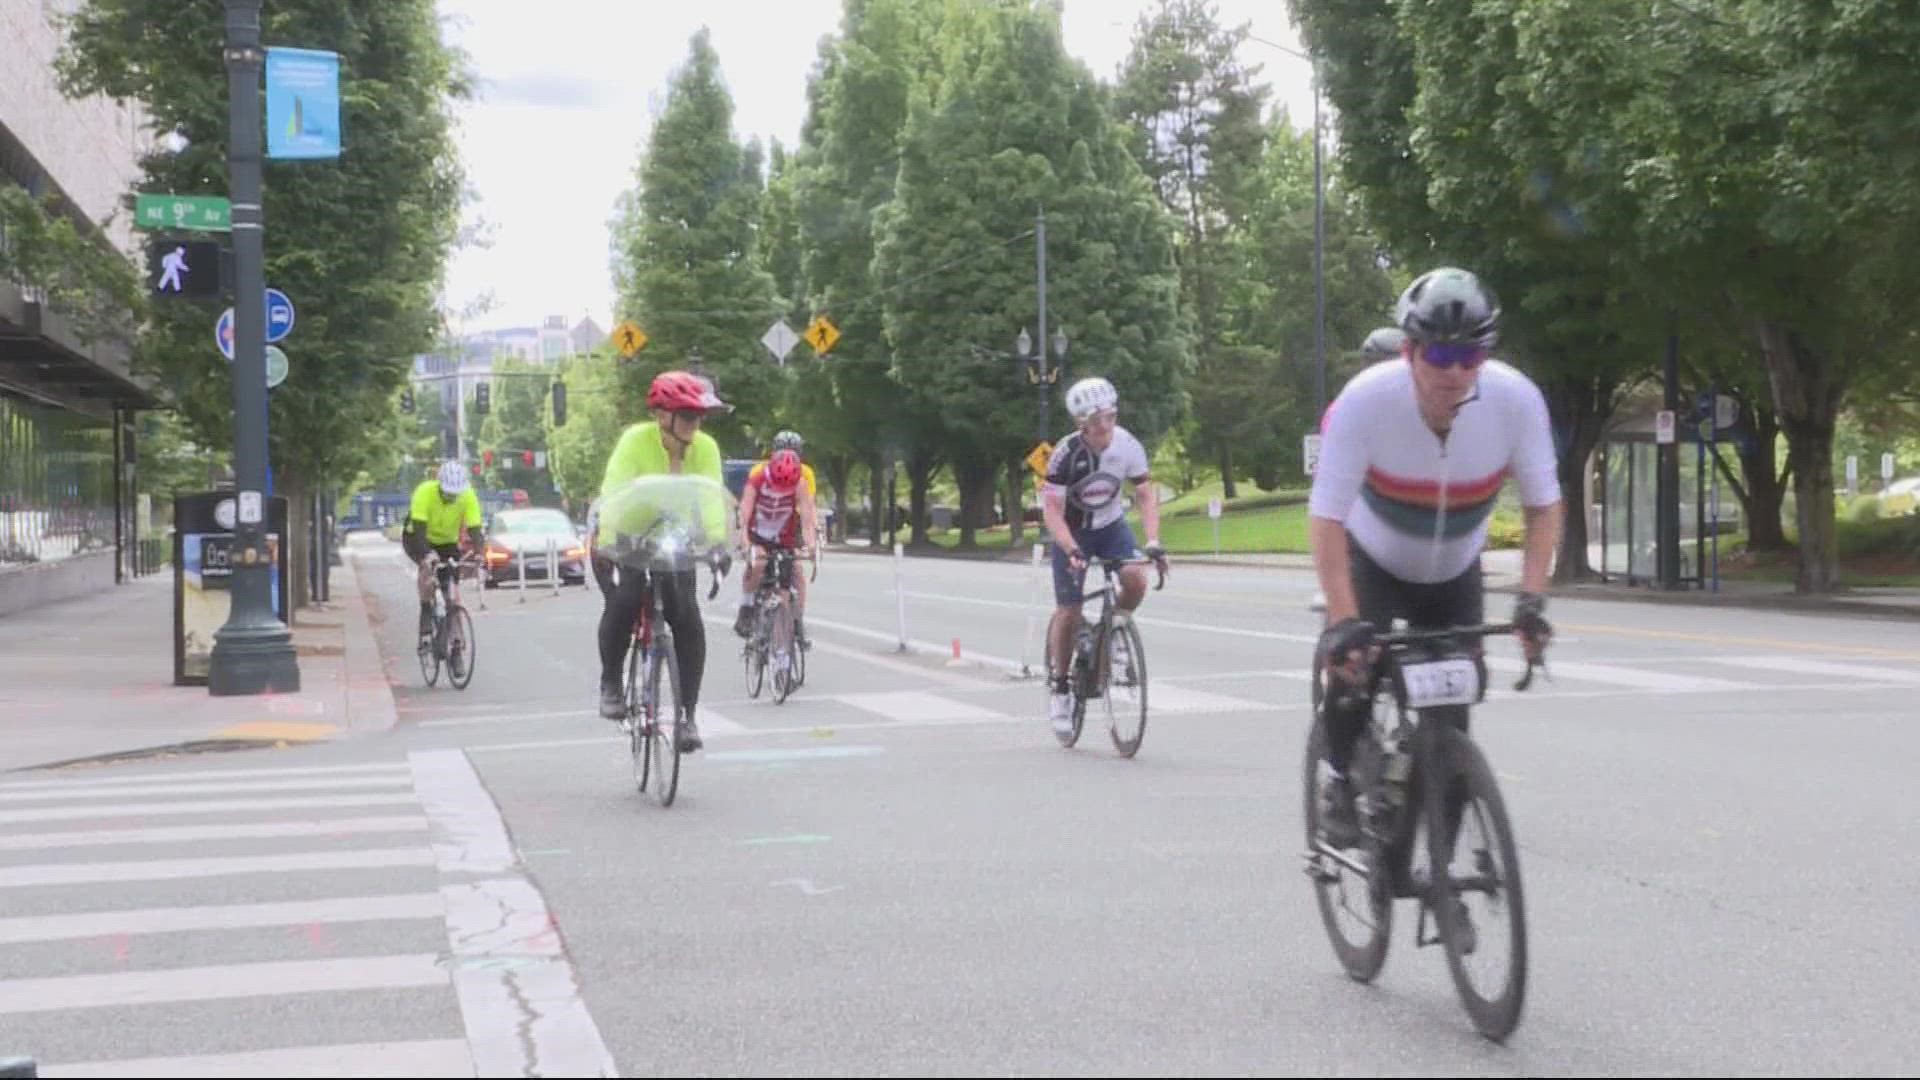 Seattle to Portland bike ride returns